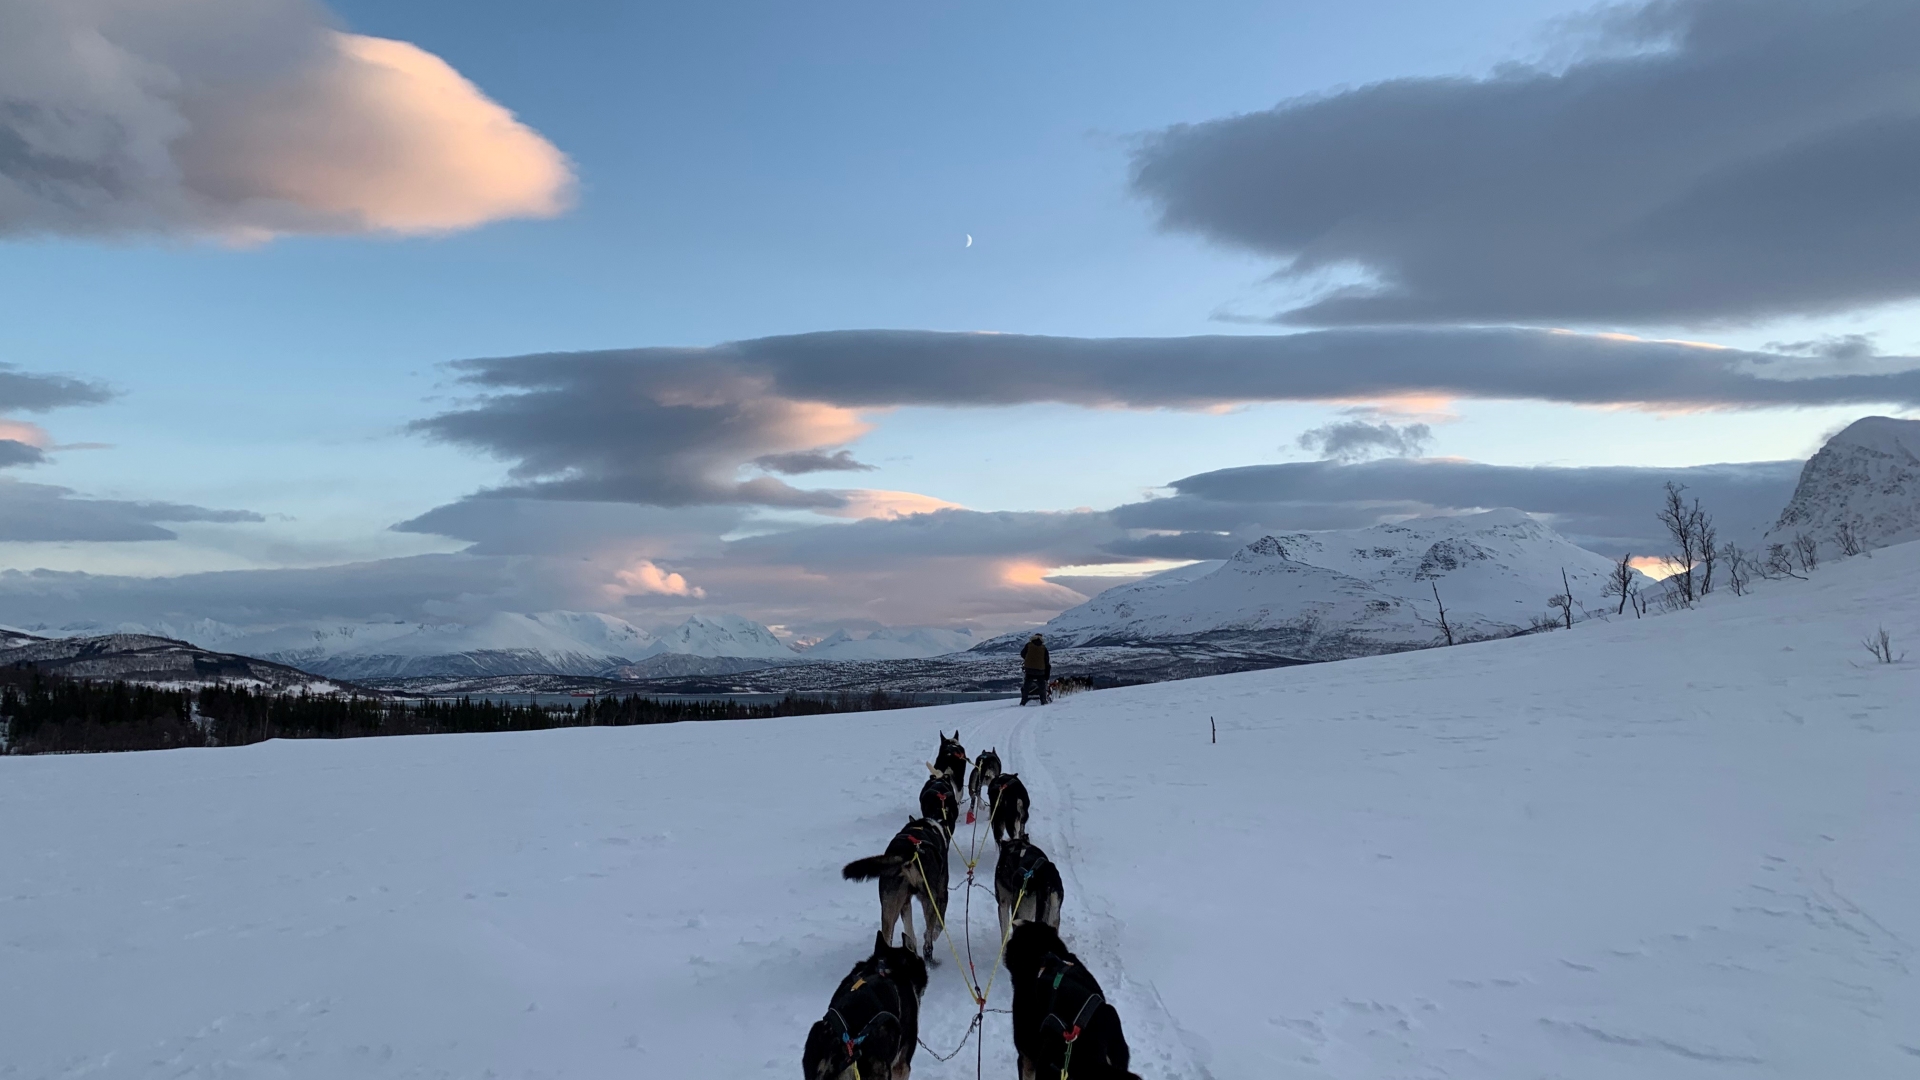 Dog sledding in snowy landscape